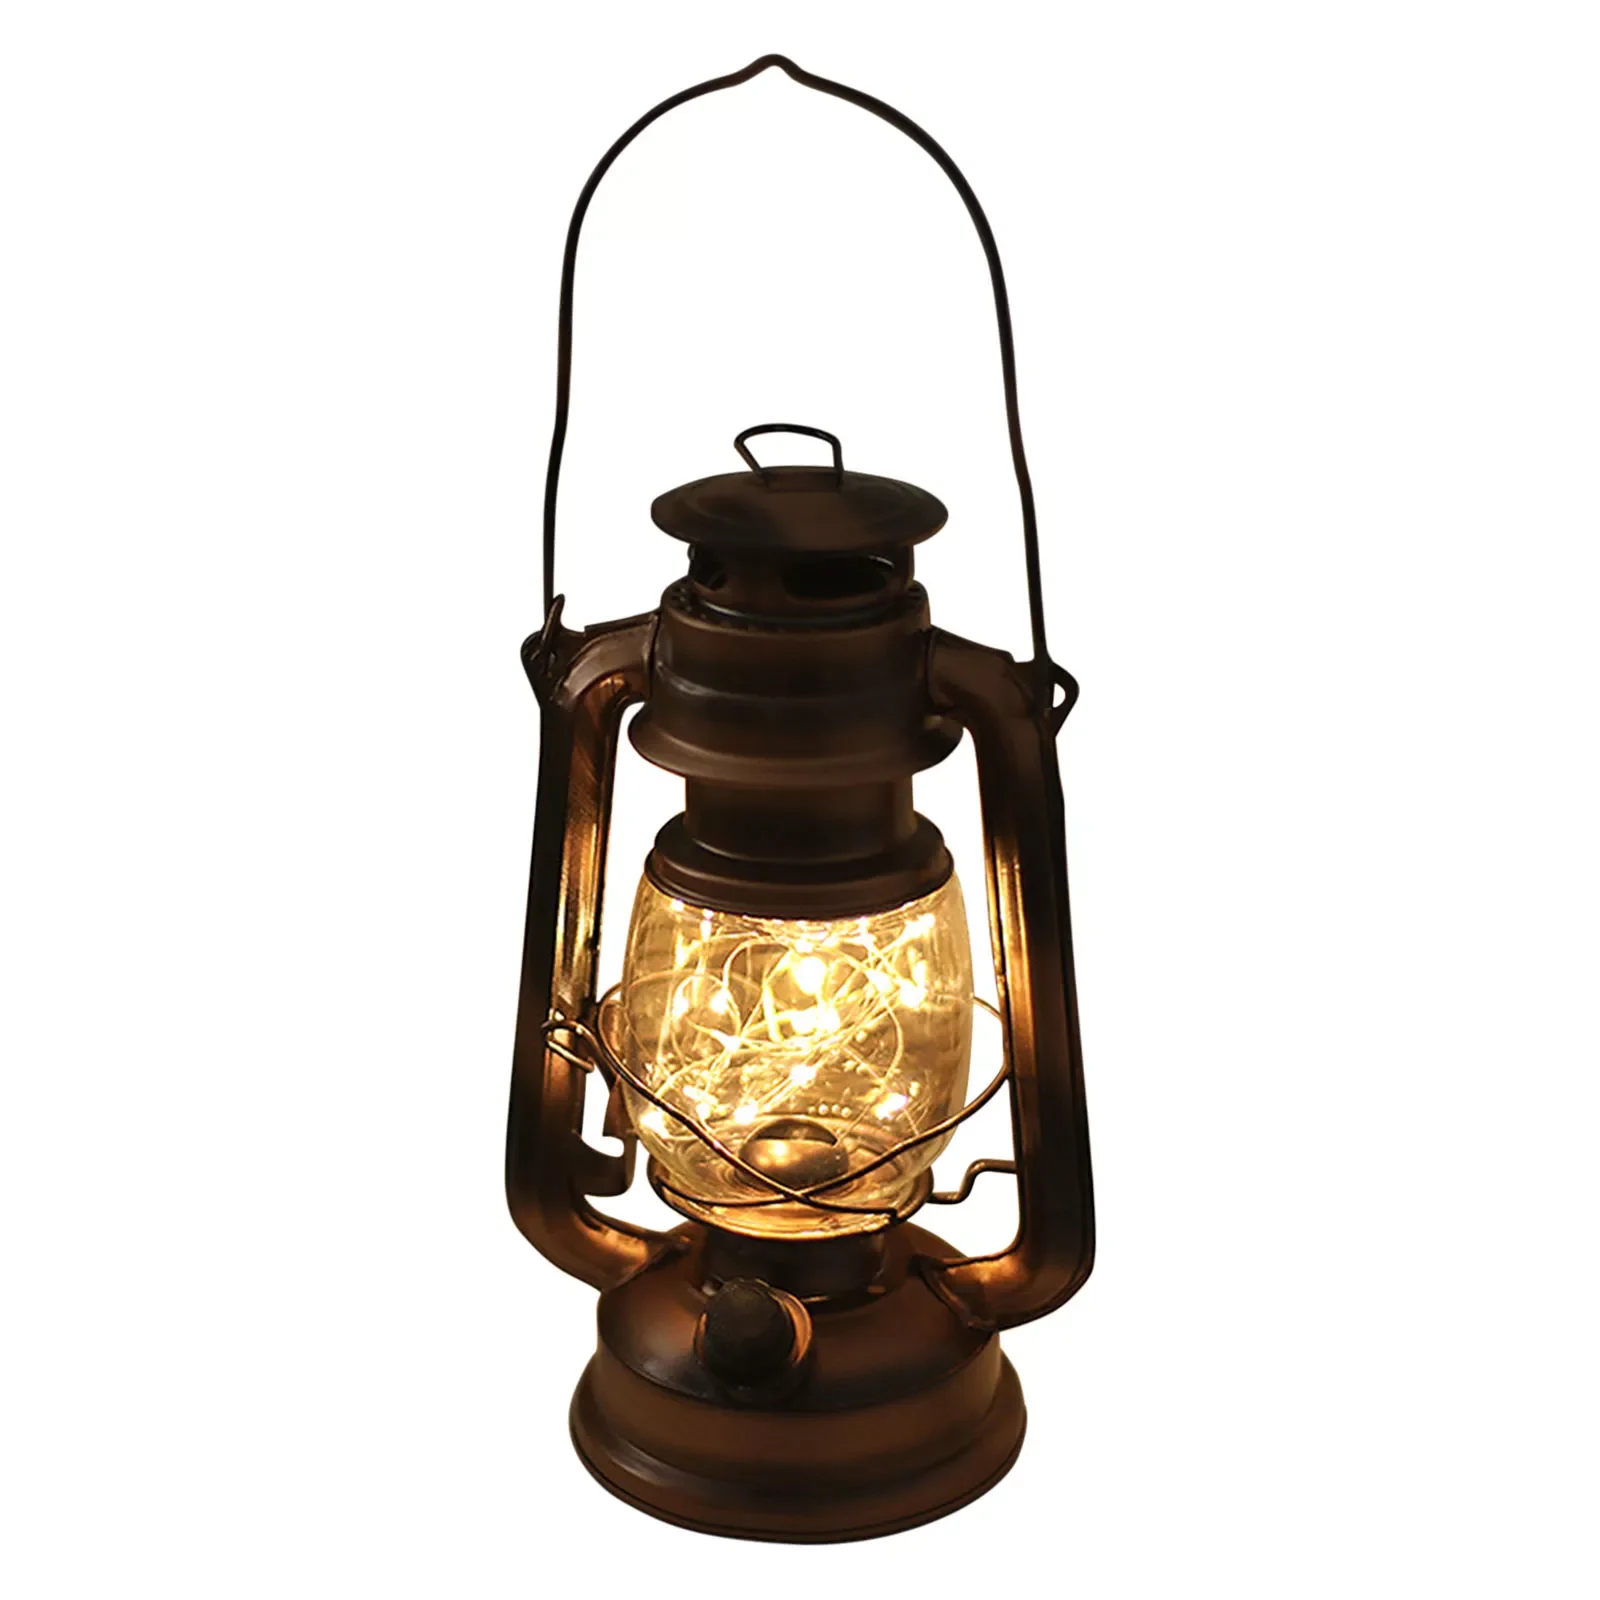 Kerosene Lamp Vintage Oil Lamp Burning Lantern Outdoor Camping Light Hanging Nightlights Christmas Home Decoration enlarge